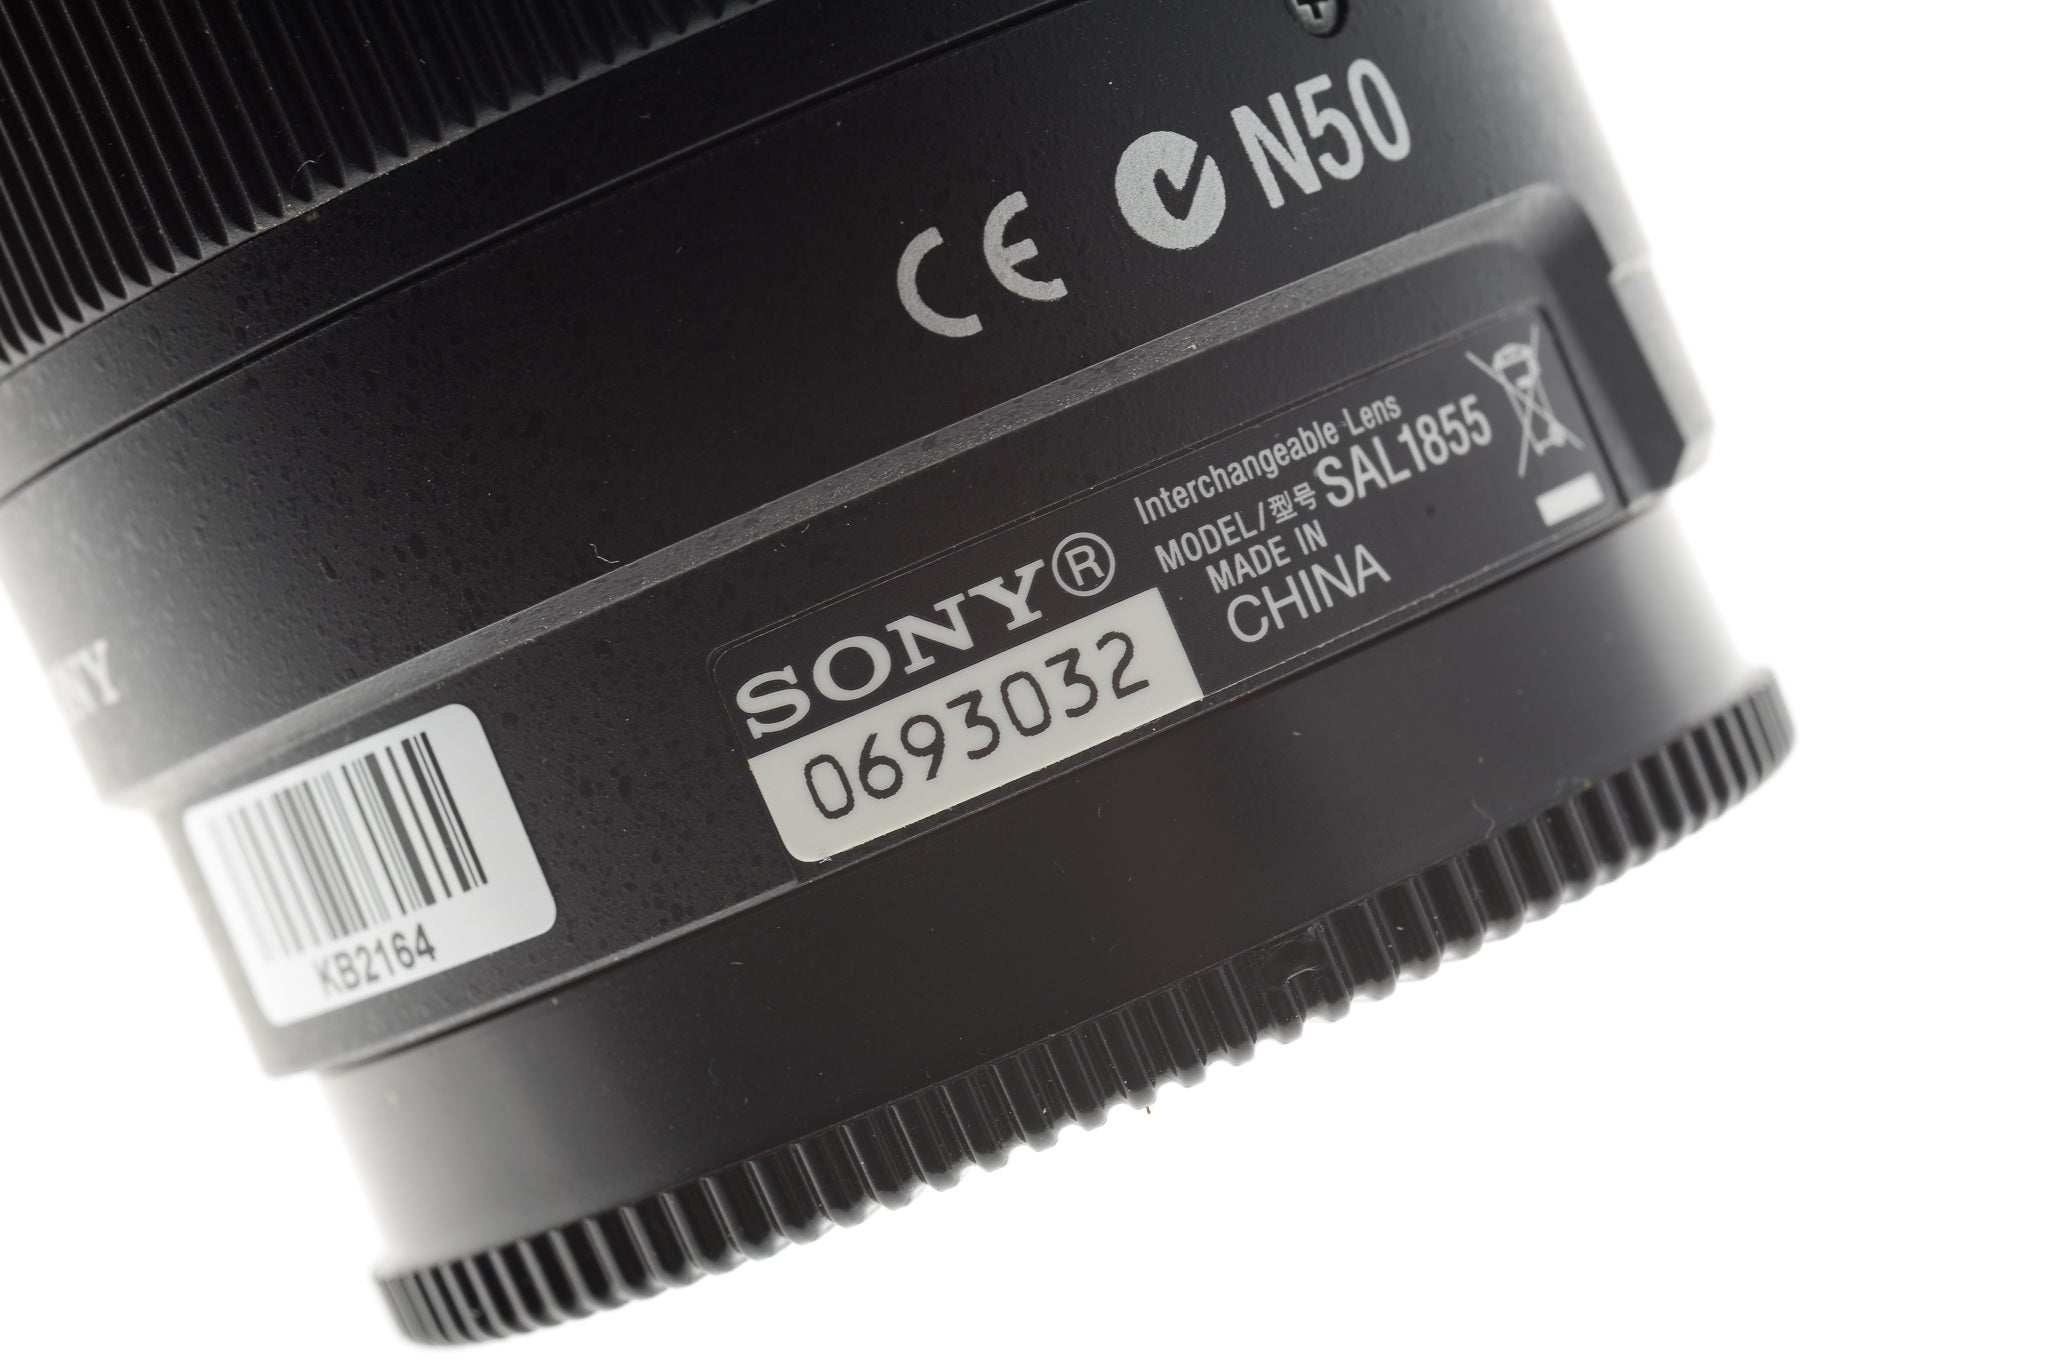 Sony 18-55mm f3.5-5.6 DT SAM – Kamerastore